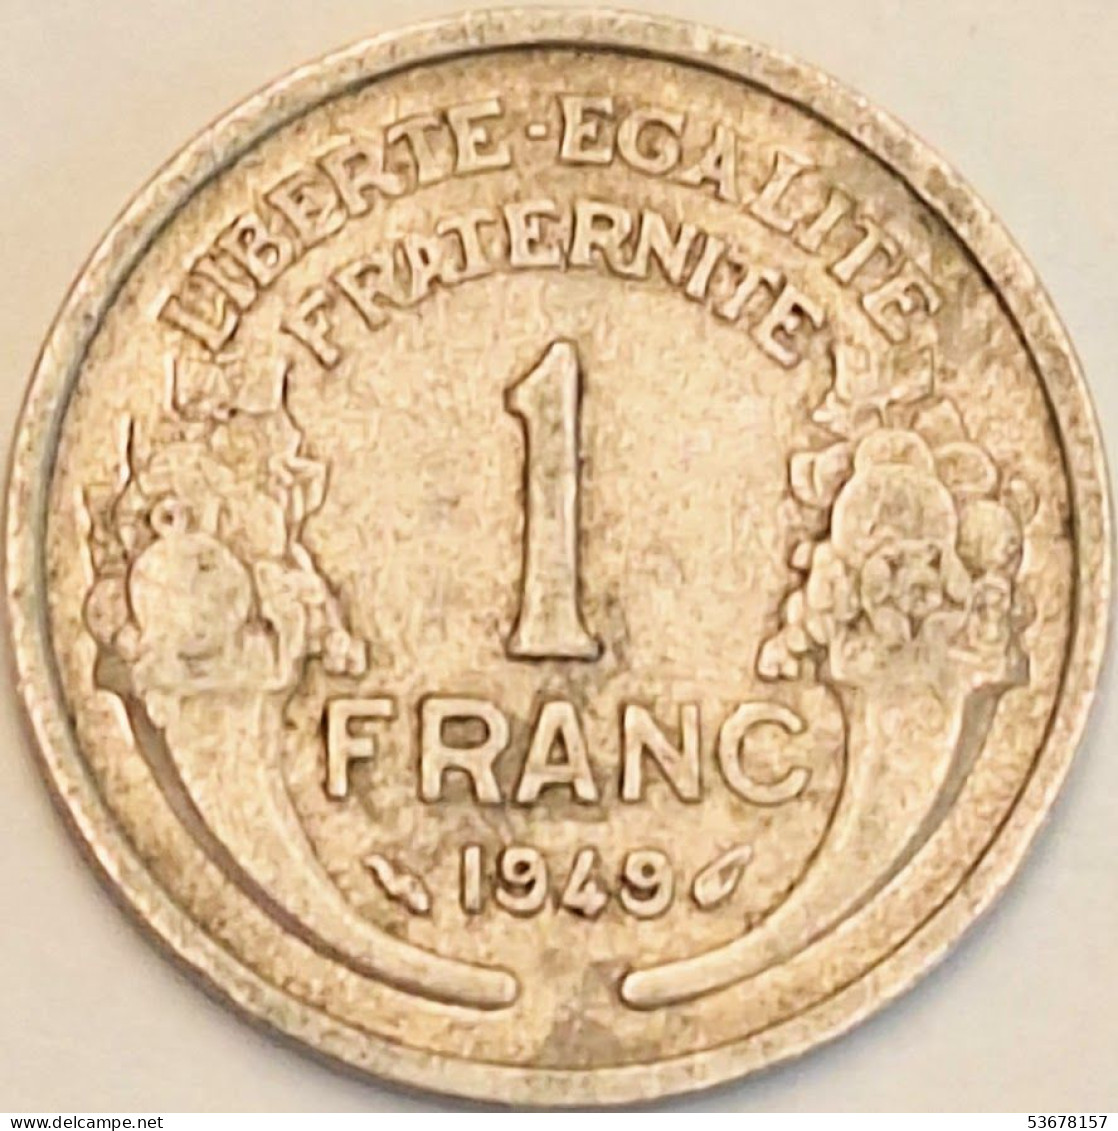 France - Franc 1949, KM# 885a.1 (#4085) - 1 Franc